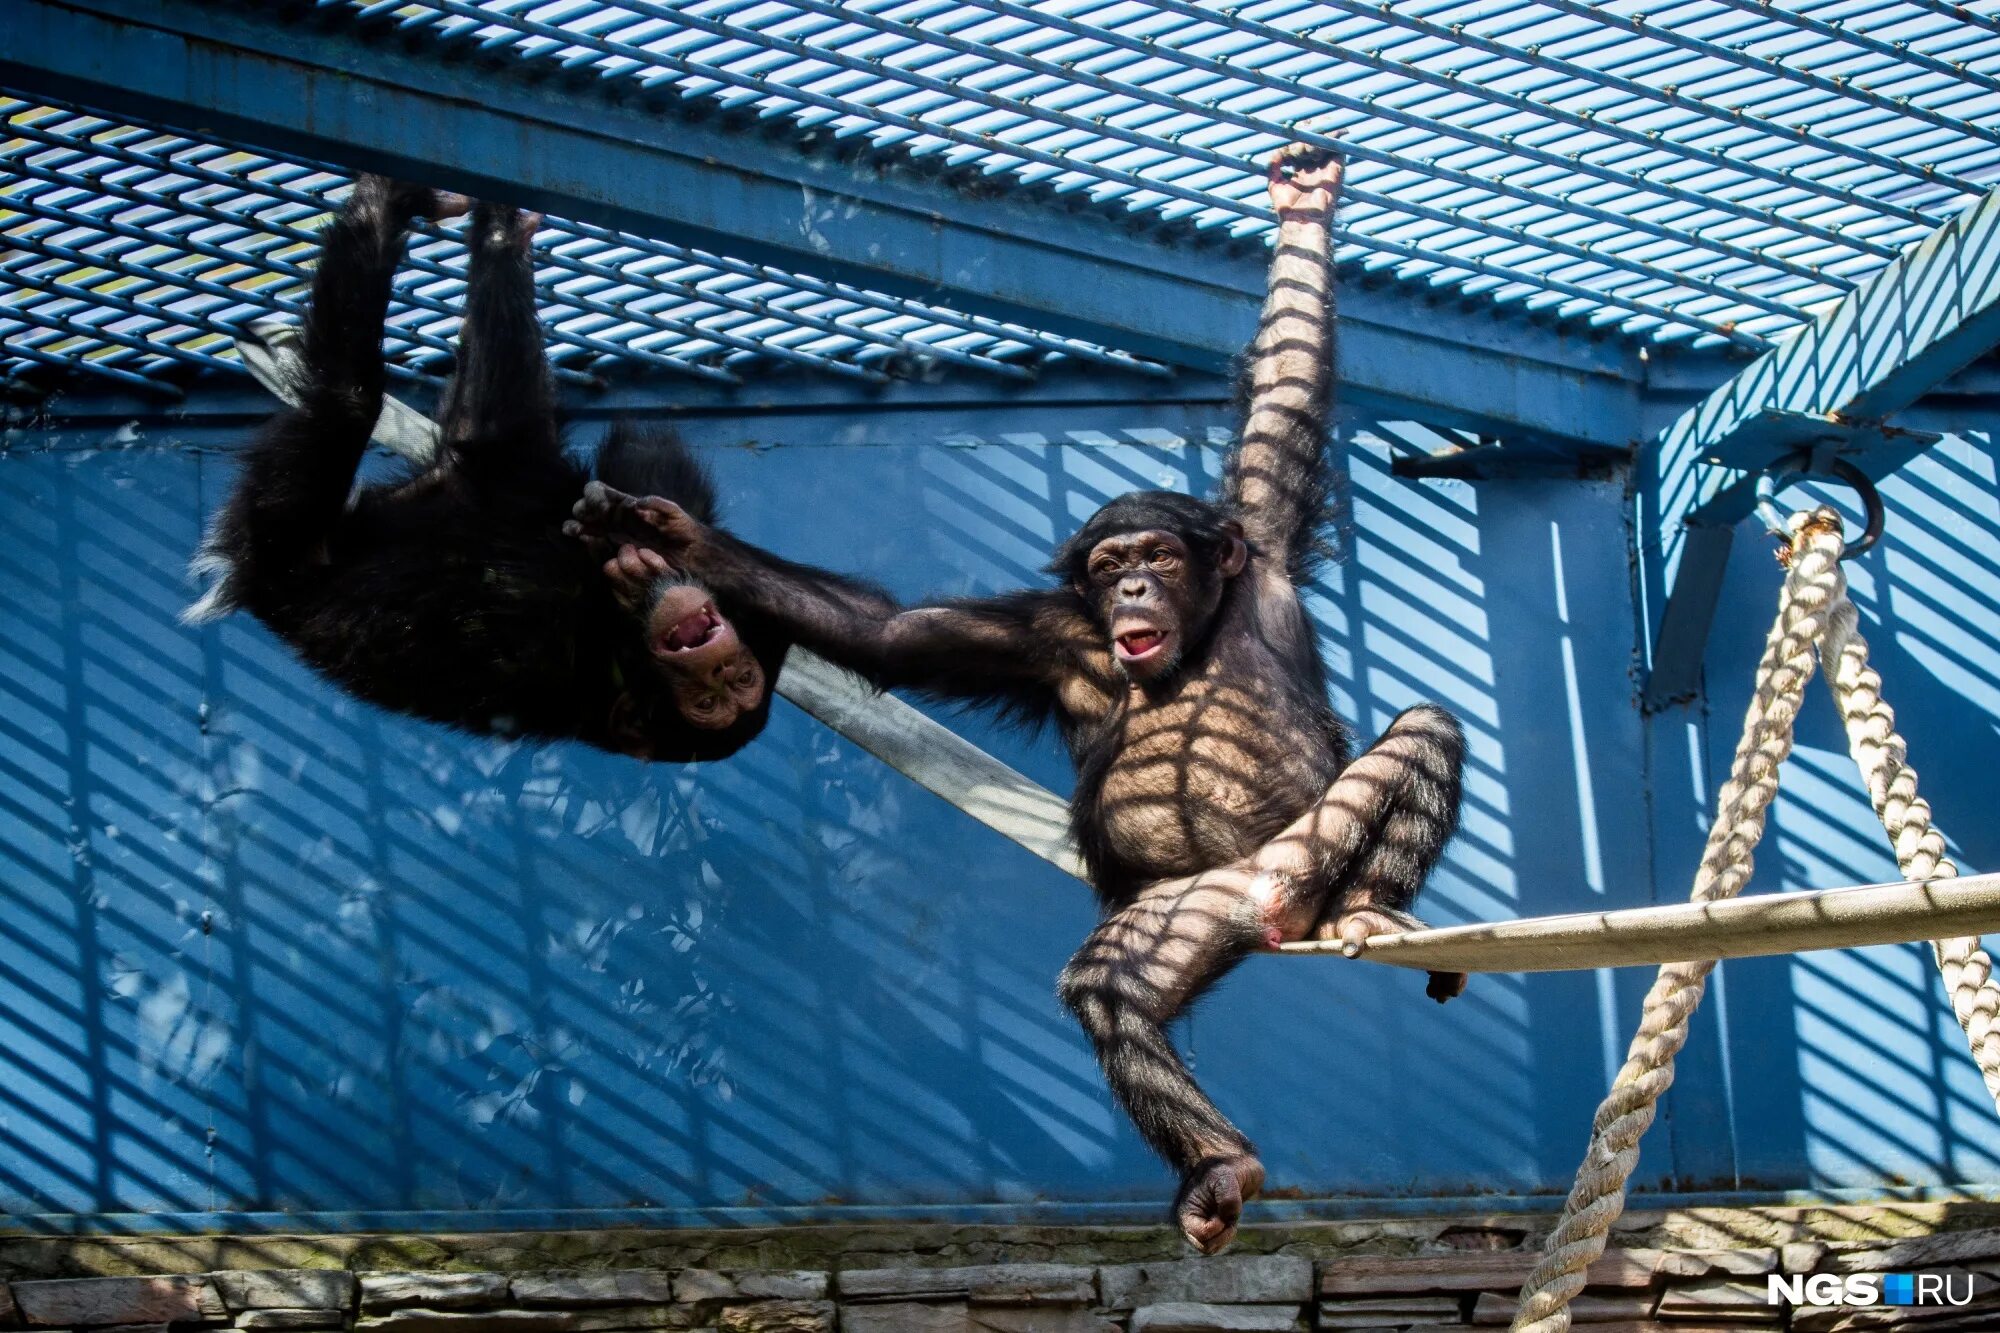 Обезьяны спб. Шимпанзе Новосибирский зоопарк. Обезьяна в зоопарке. Зоопарк Новосибирск обезьяны.